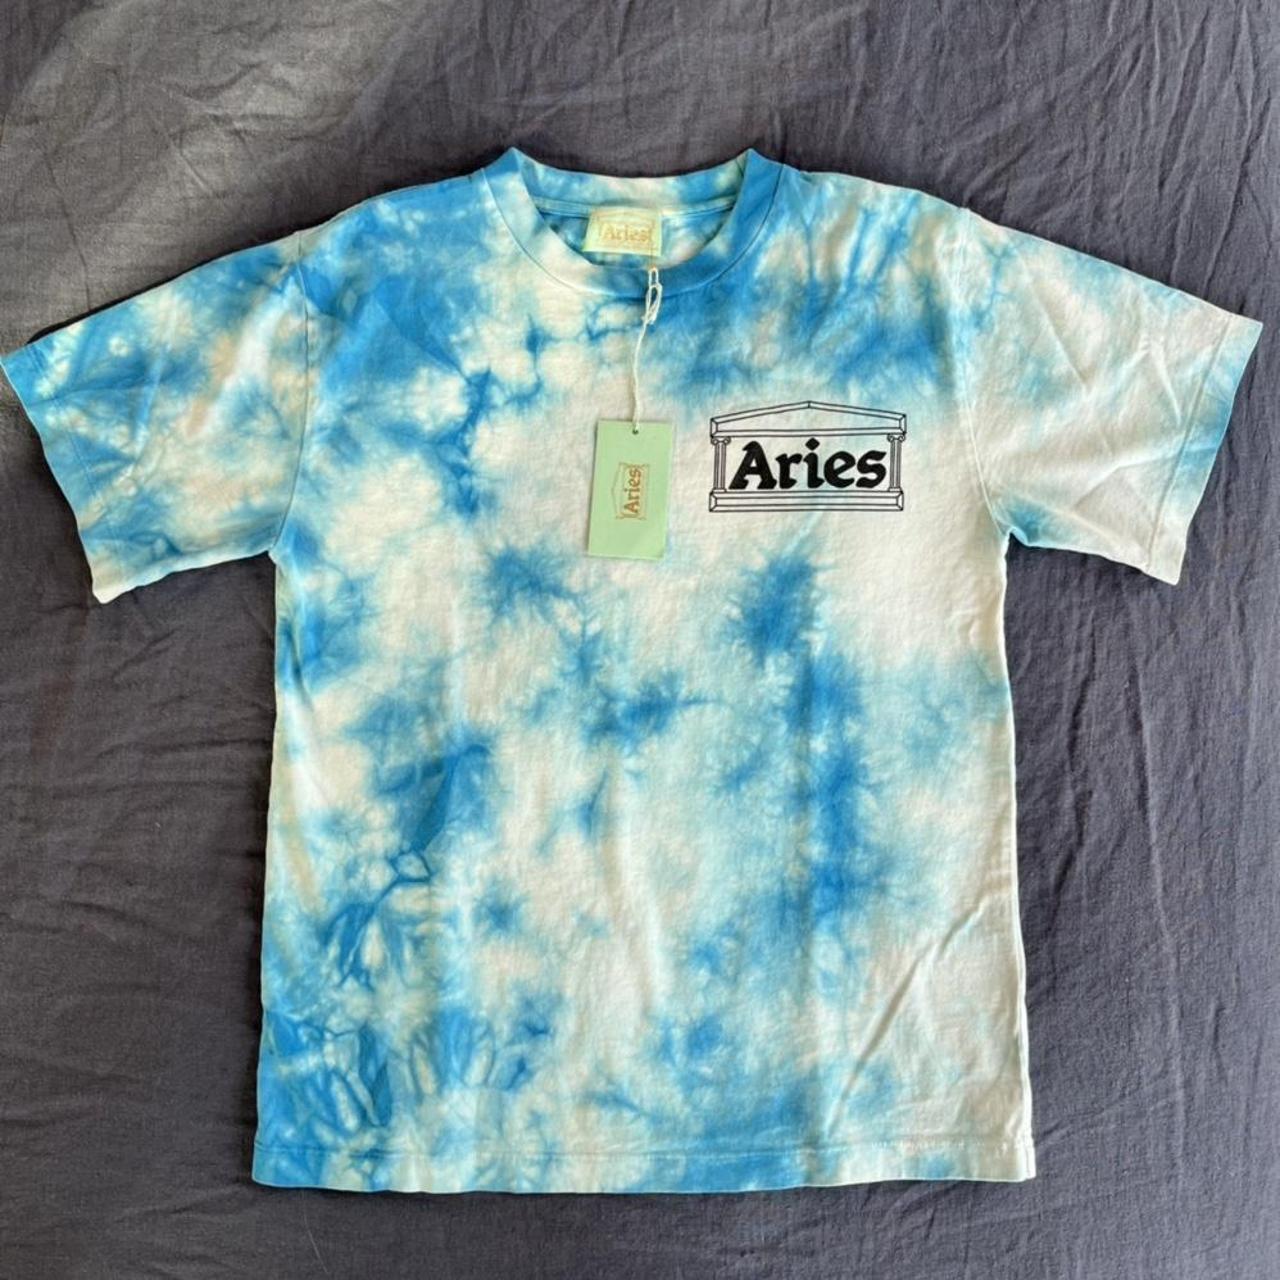 Product Image 1 - Blue tie dye Aries T-shirt.

Pit